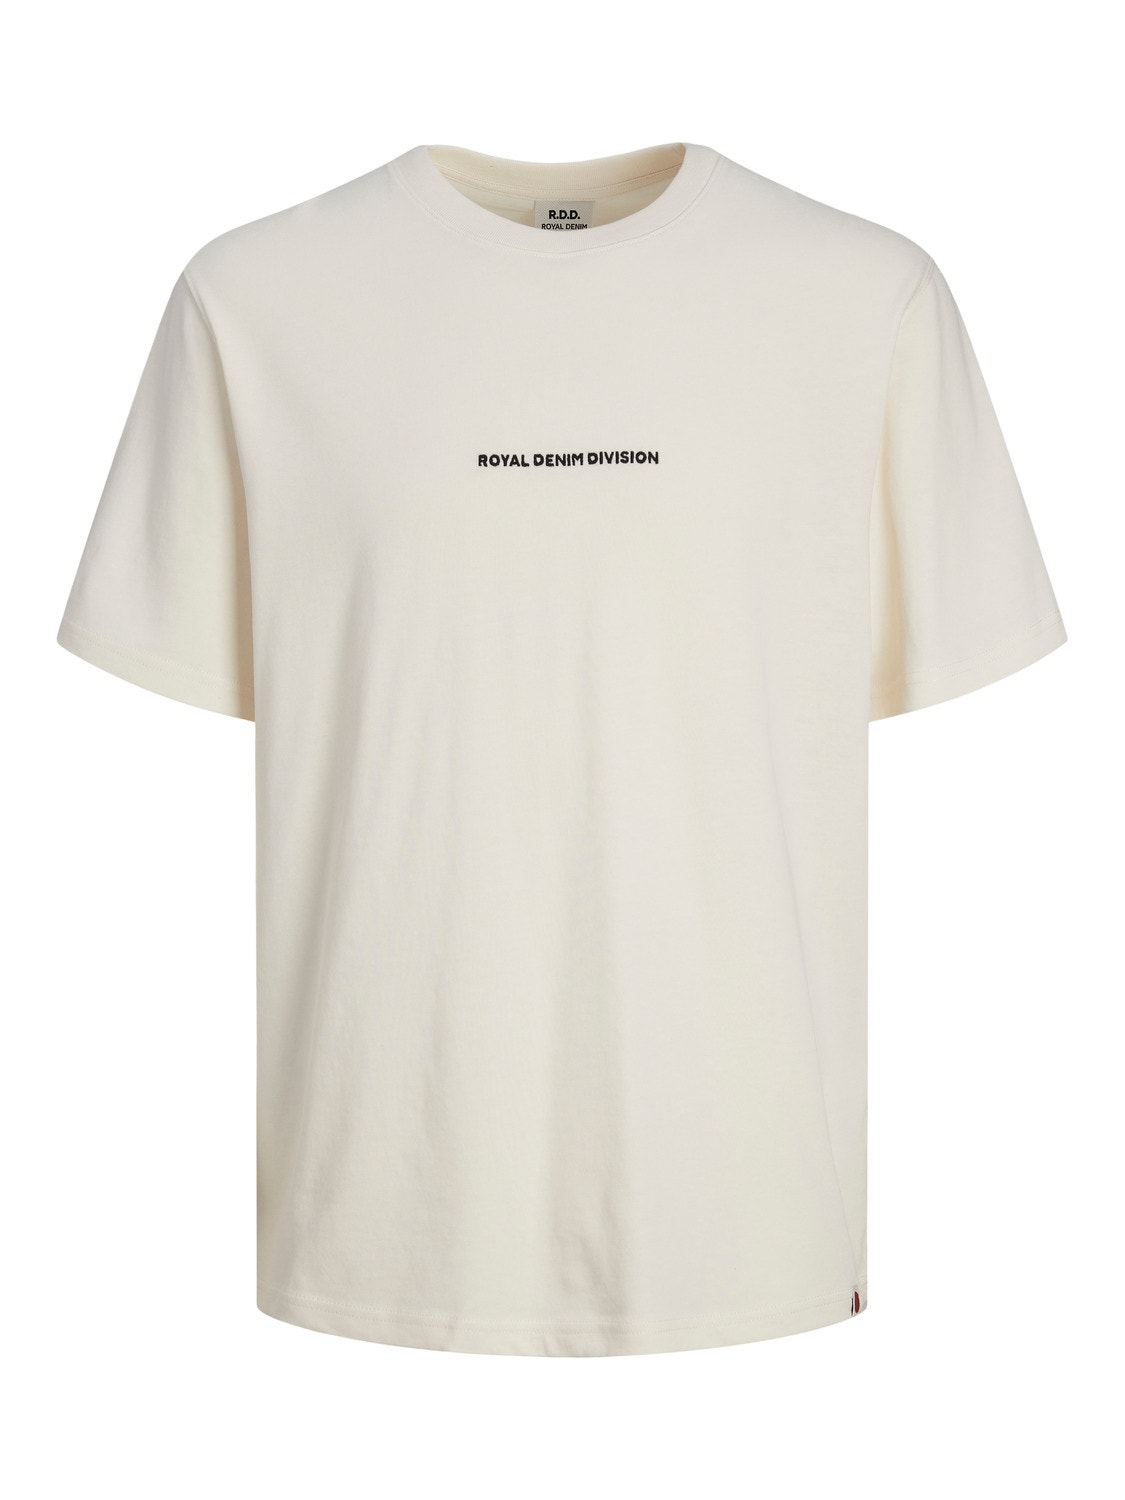 Jack & Jones RDD T-shirt Estampar Decote Redondo -Egret - 12253392